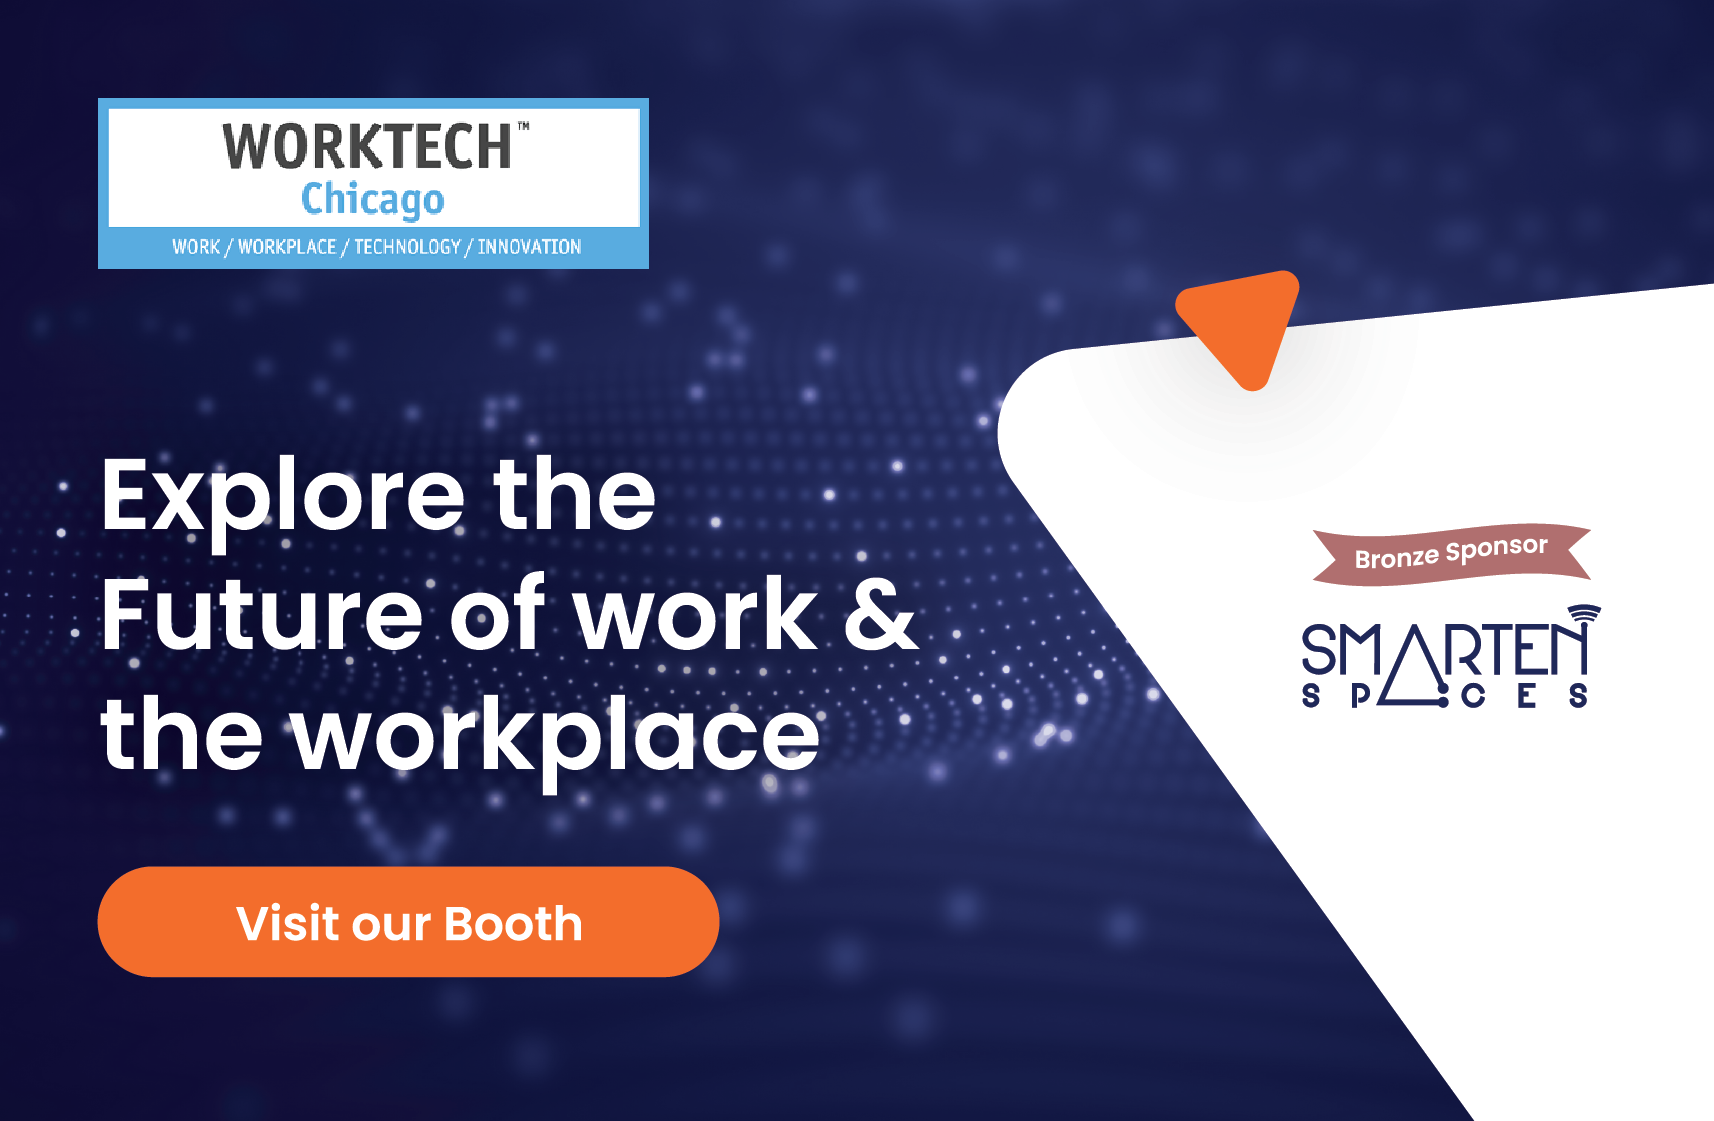 Smarten Spaces announces bronze sponsorship for Worktech22 Chicago